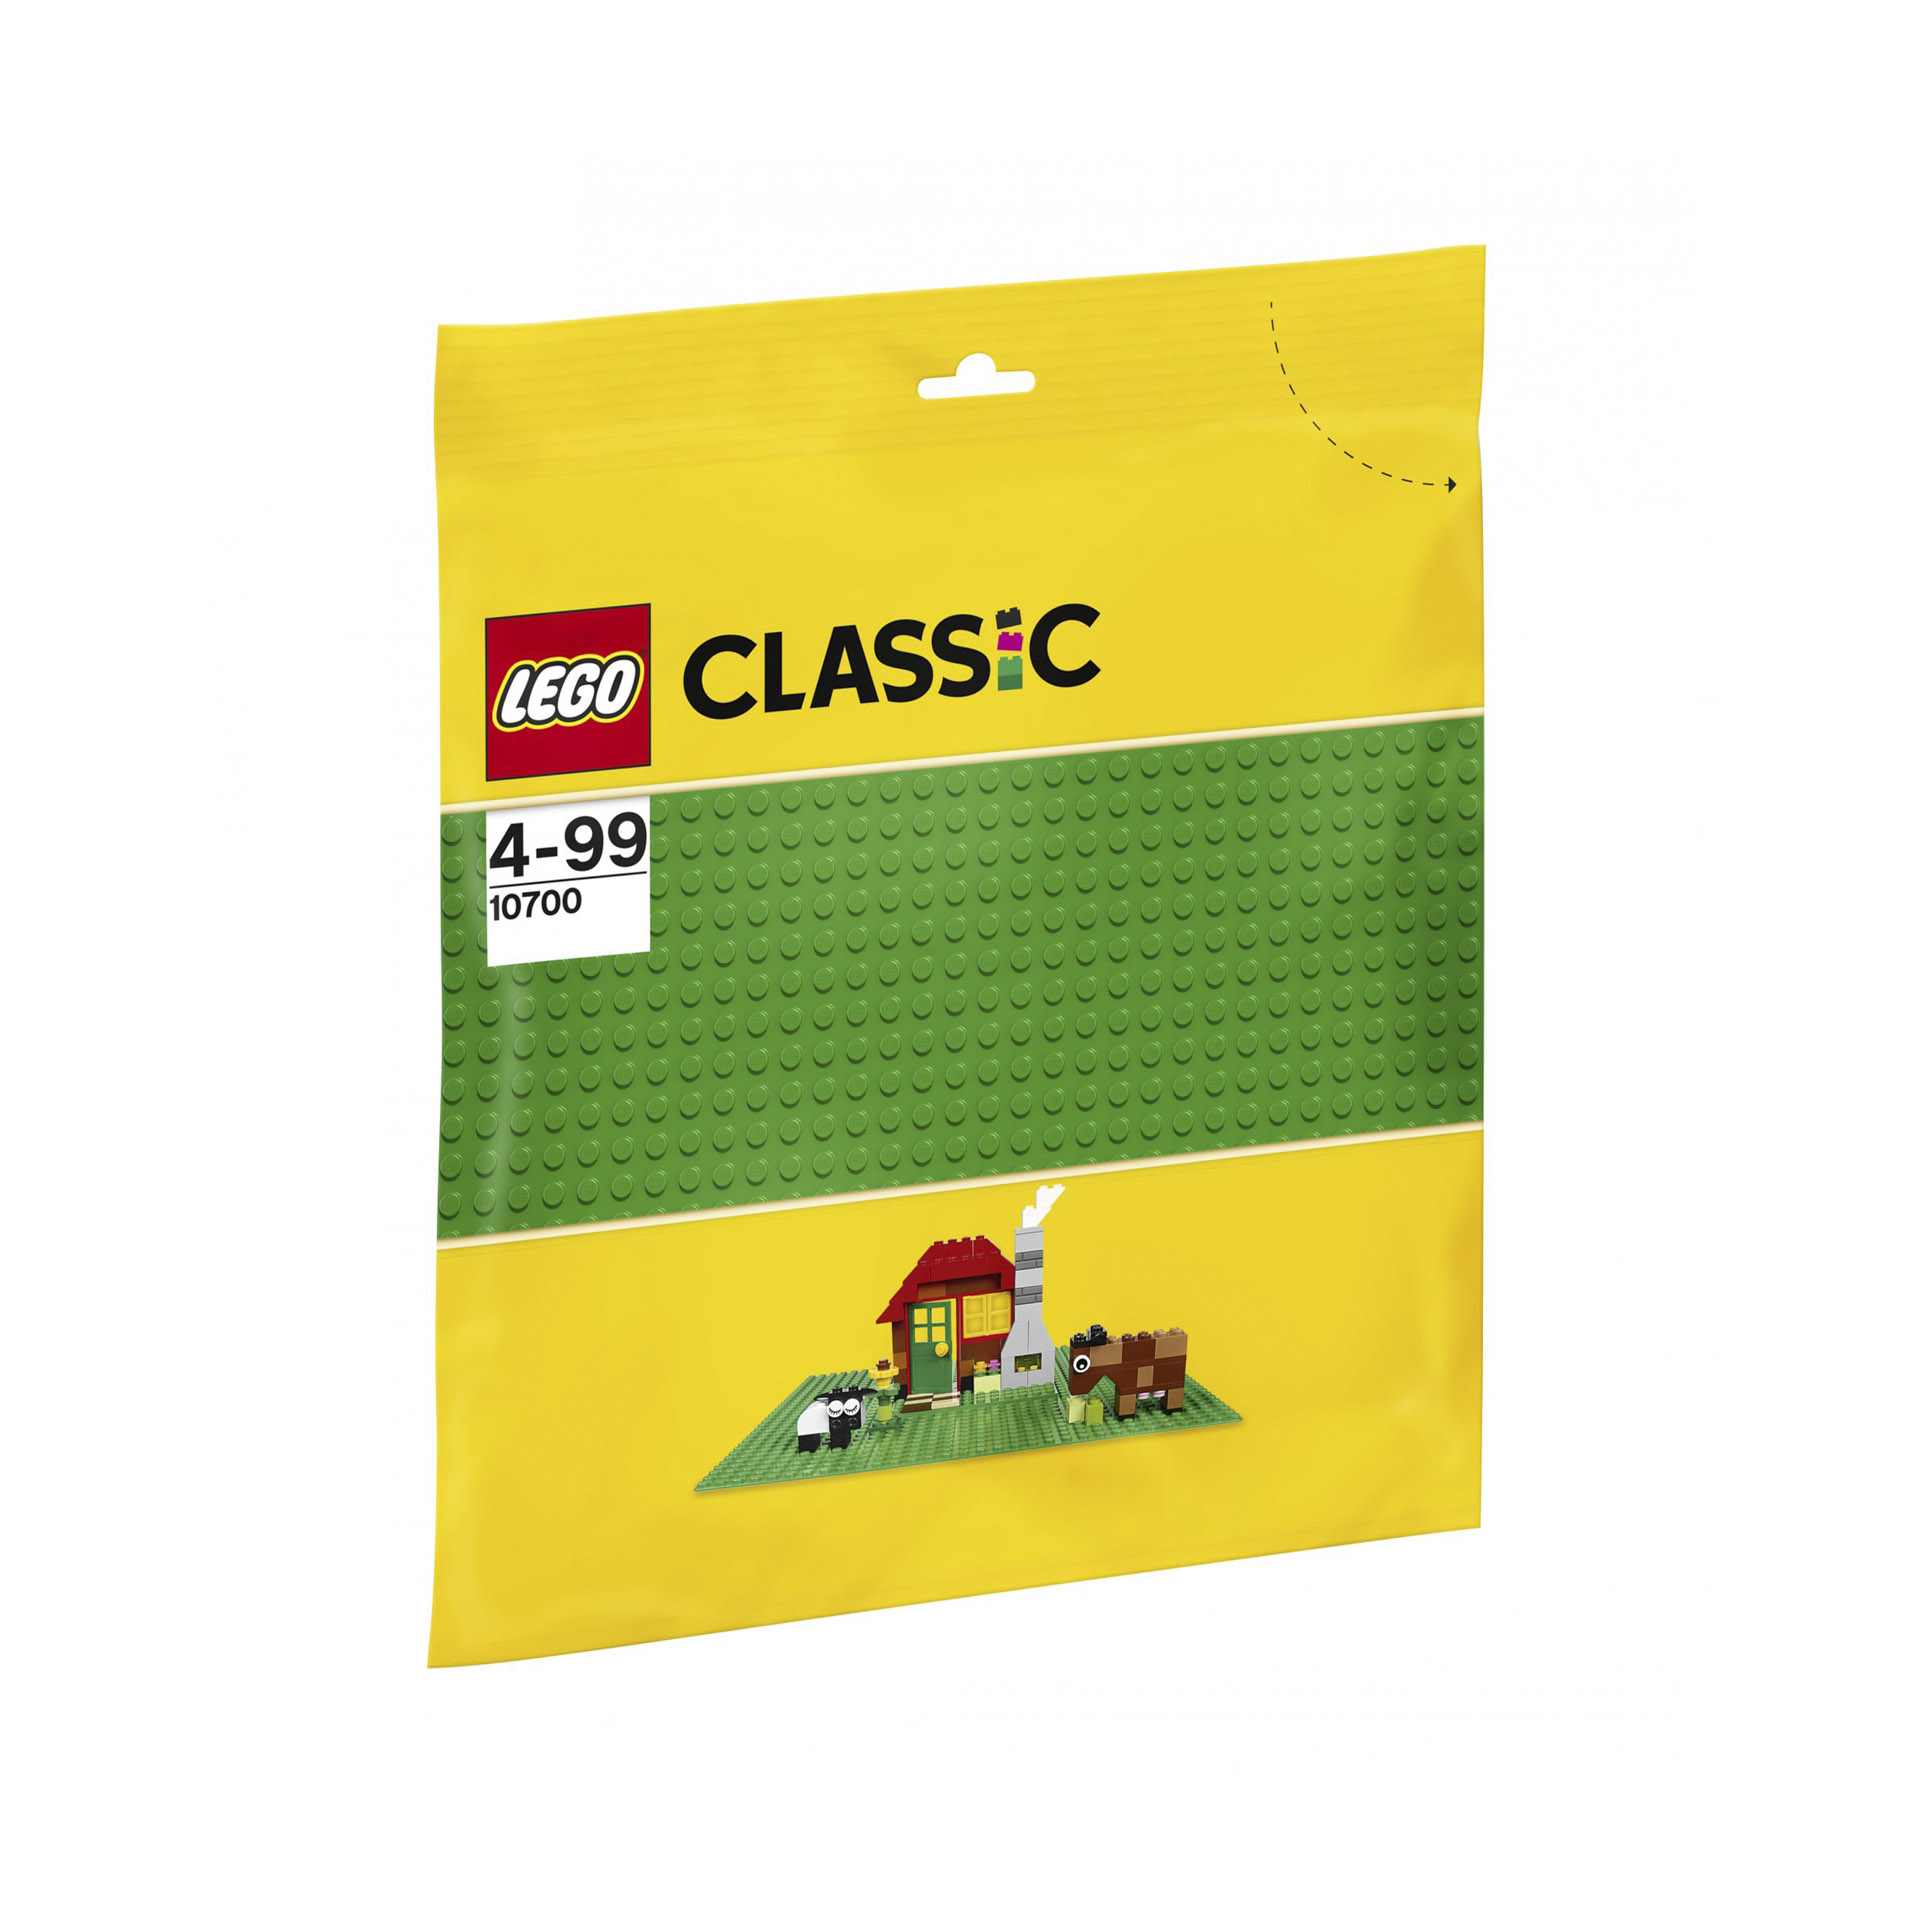 LEGO Classic Base Verde Extra per Costruzioni, Piattaforma 25 cm x 25 cm, 10700 10700, , large